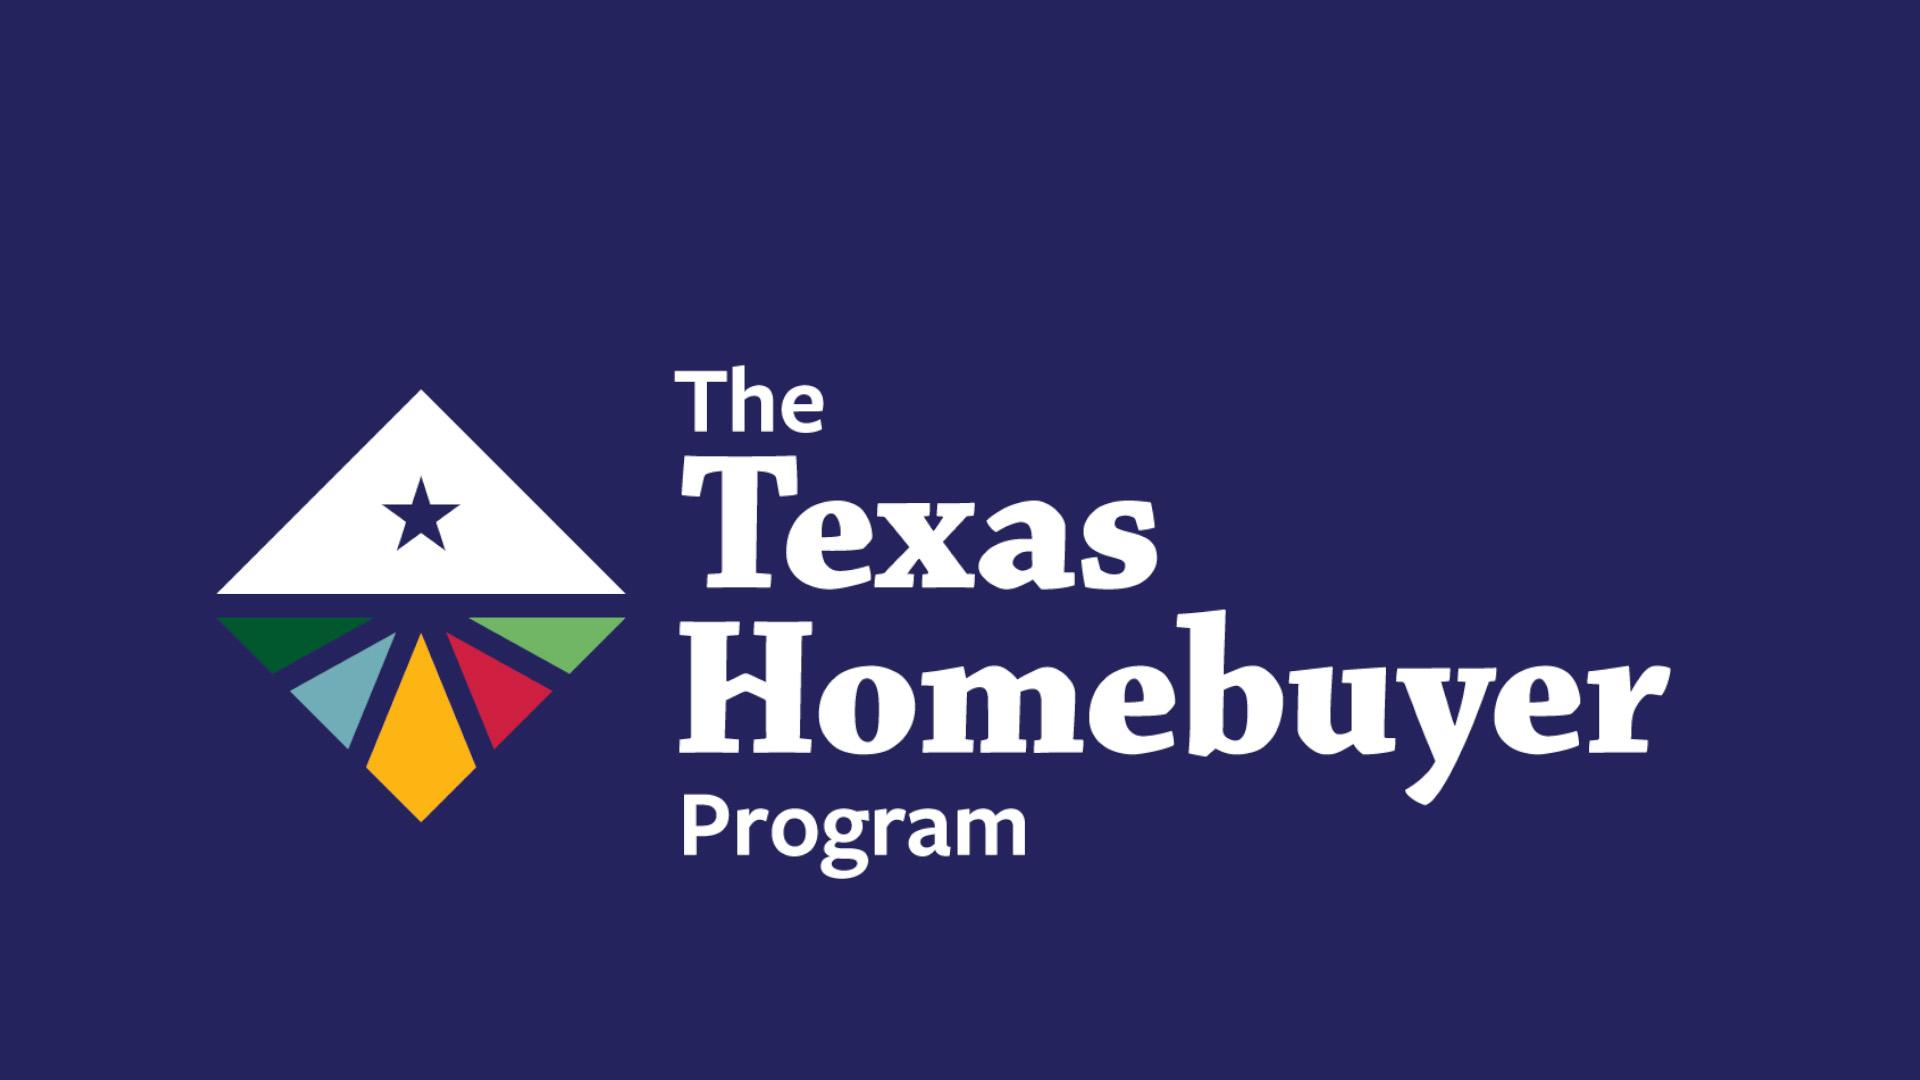 The Texas Homebuying Program